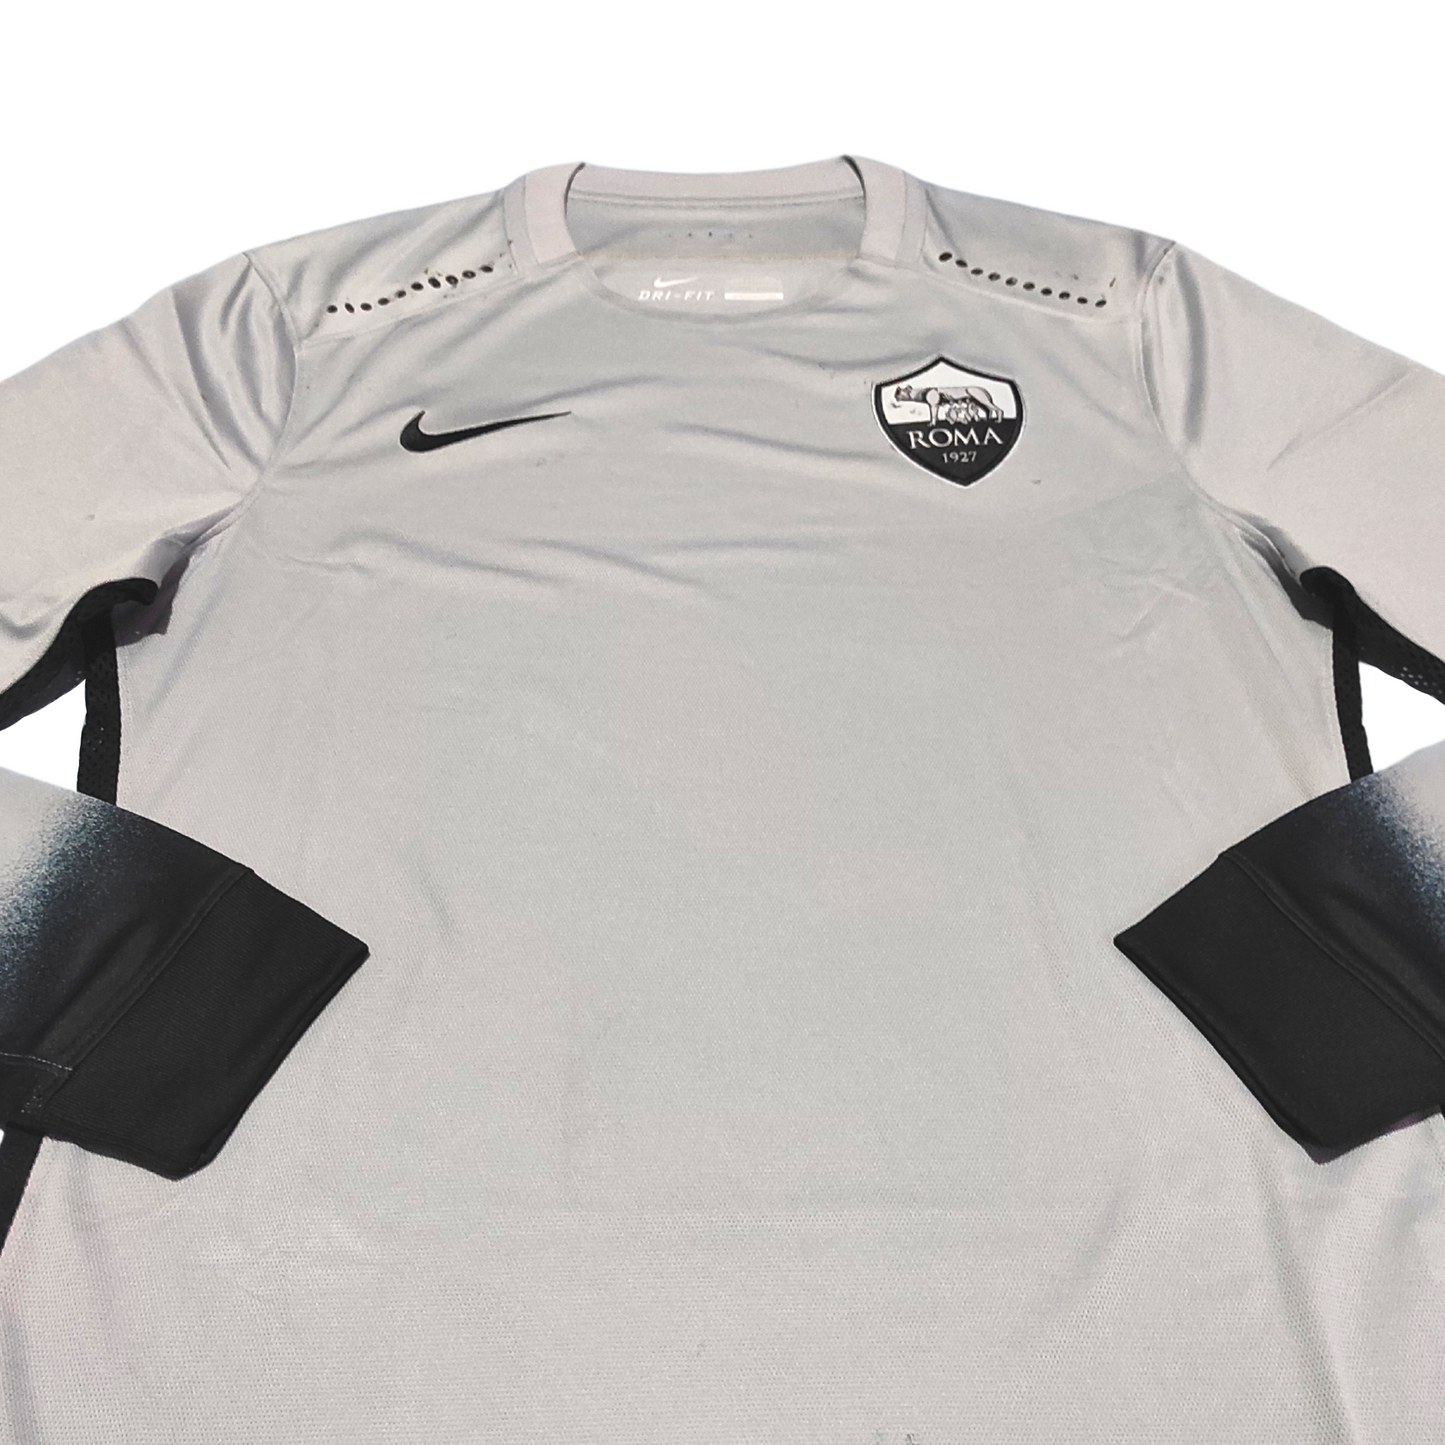 Roma Third L/S Player Issue Shirt 2015-2016 (M)